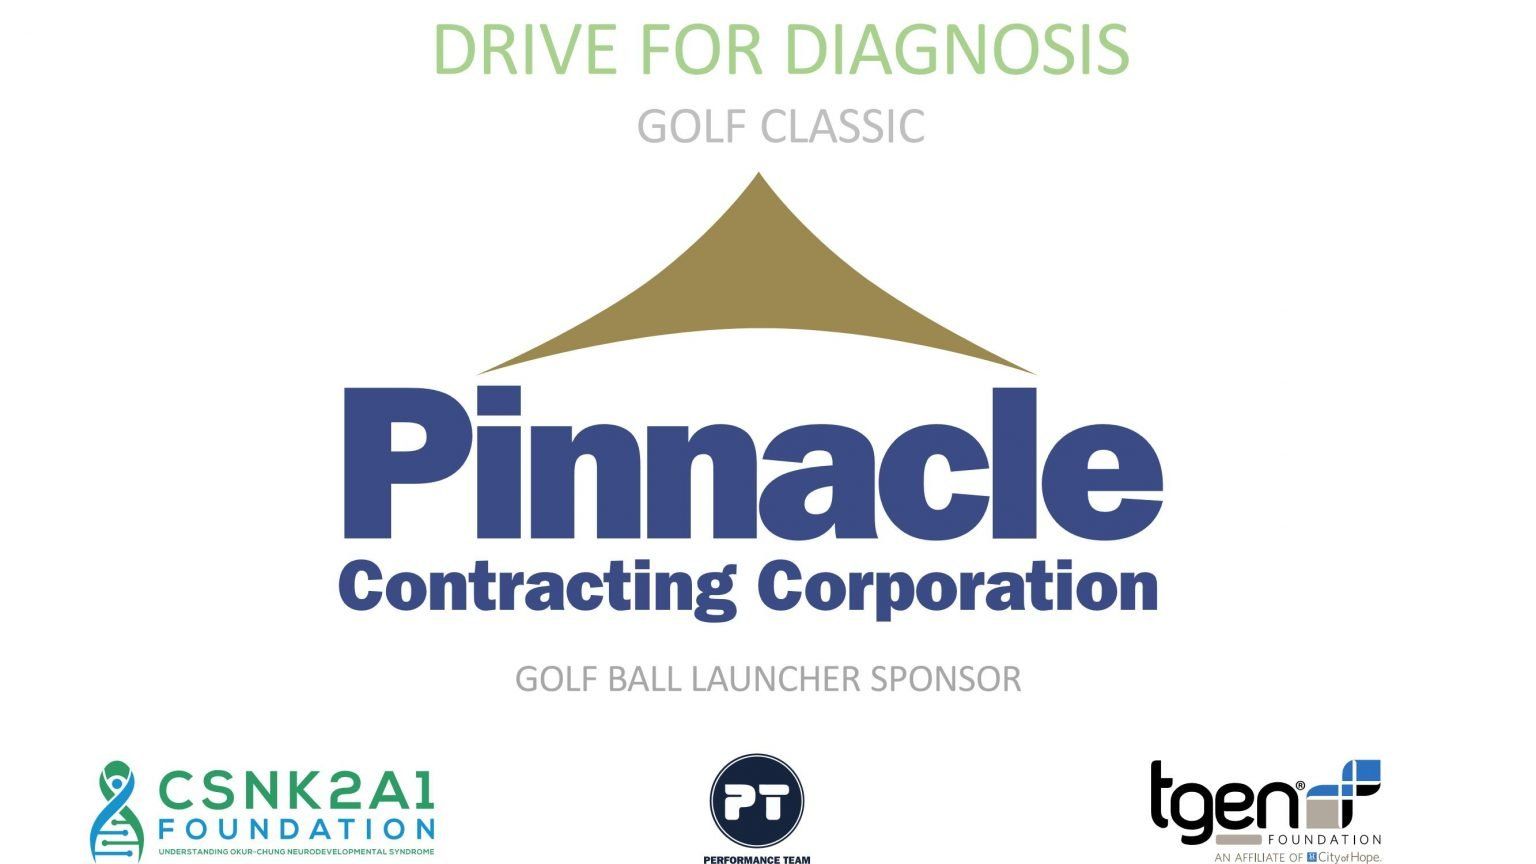 Golf Ball Launcher Sponsor - Pinnacle Contracting Corporation